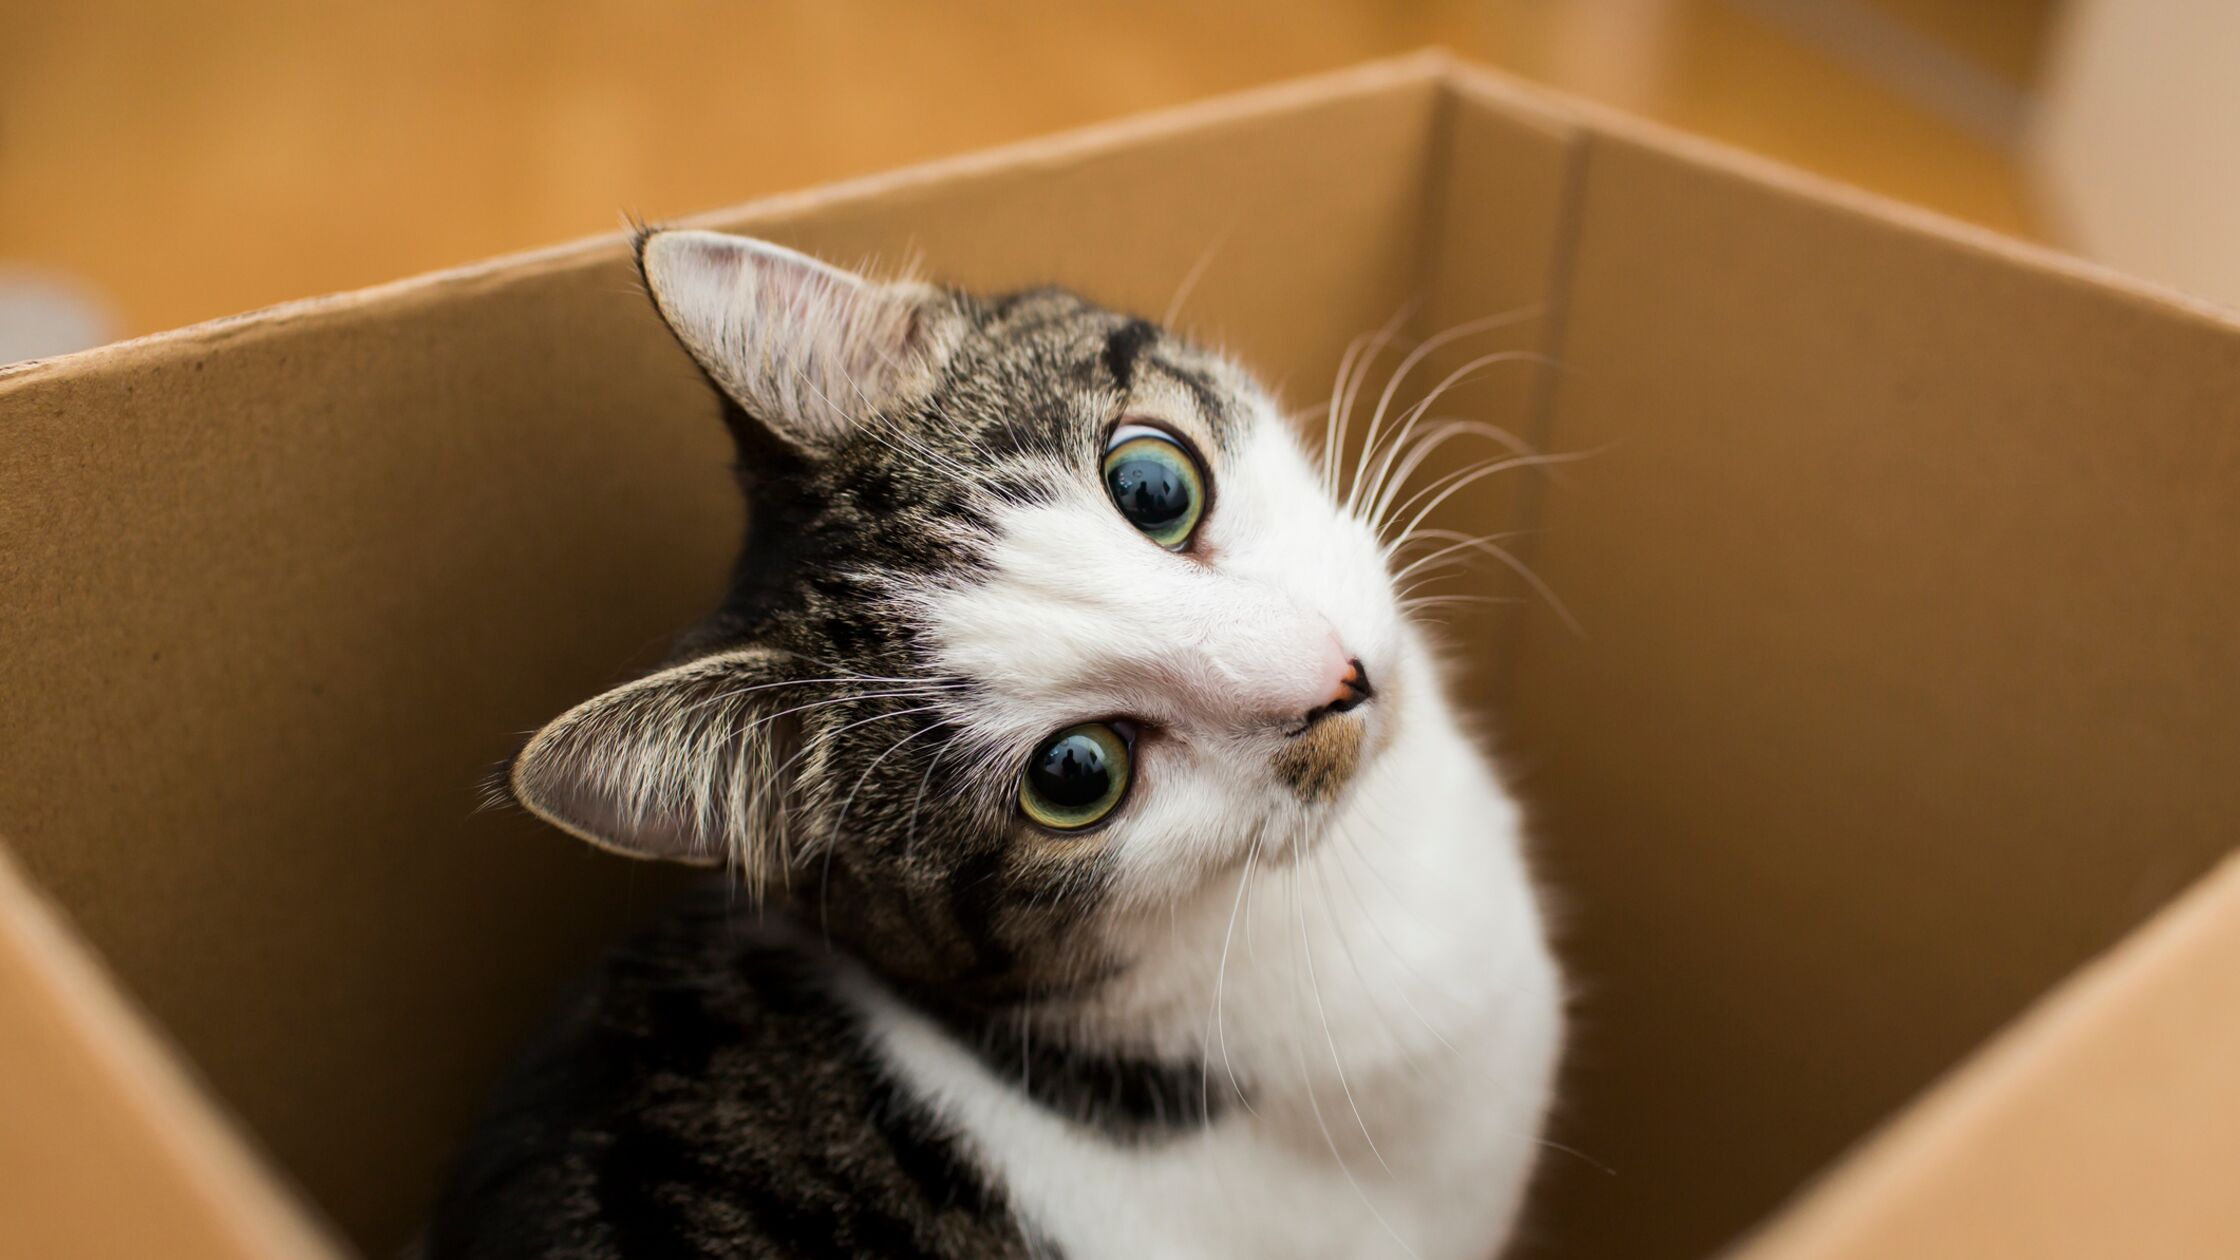 Katze an neues Zuhause gewöhnen: Das hilft nach dem Umzug